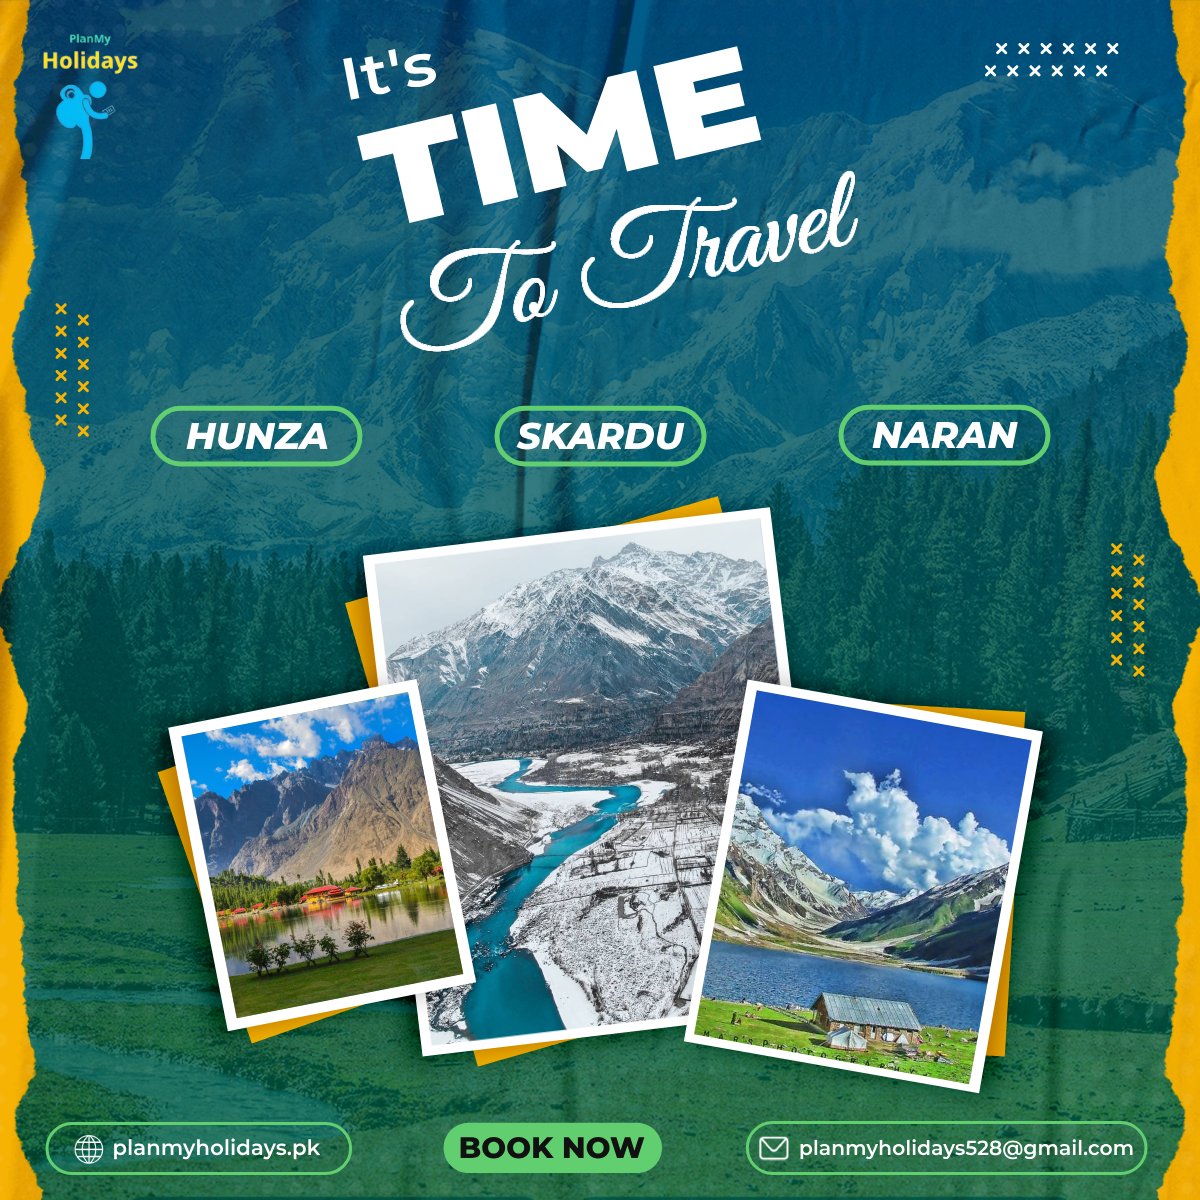 'Exploring the Beauty of Hunza, Skardu, and Naran: Where Adventure Begins!' #TravelPakistan #HunzaValley #SkarduAdventure #NaranBeauty #ExploreTheNorth #travelgoals
#pakistantourism #CaptureTheMoment #travelwithus